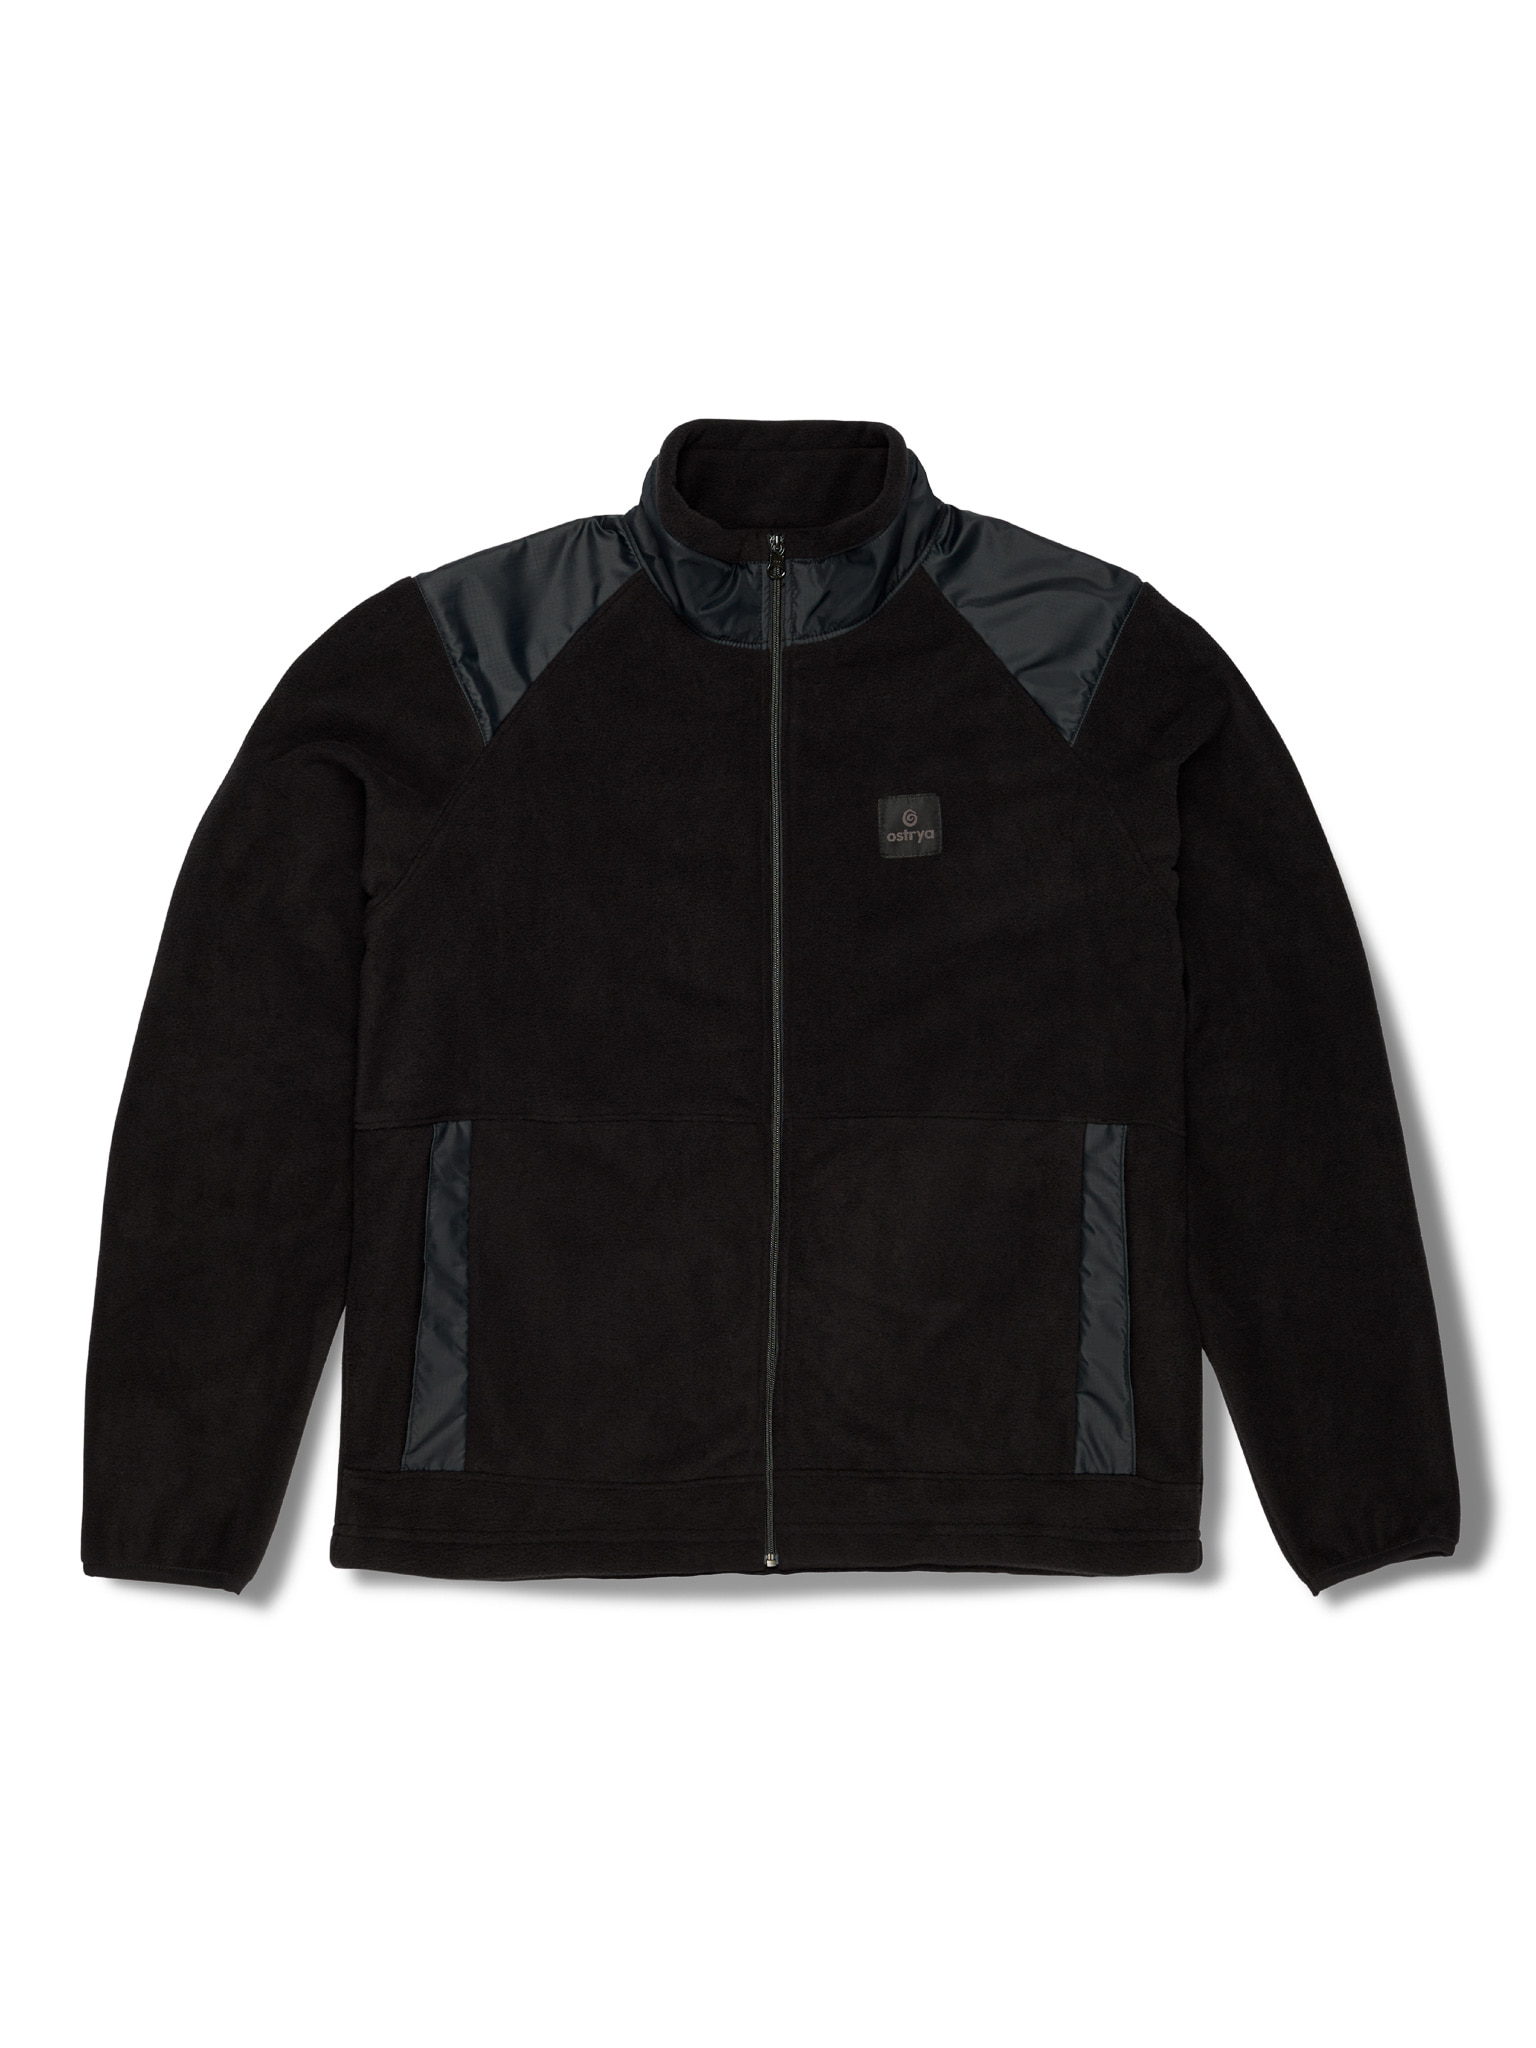 Surplus Fleece Jacket Black